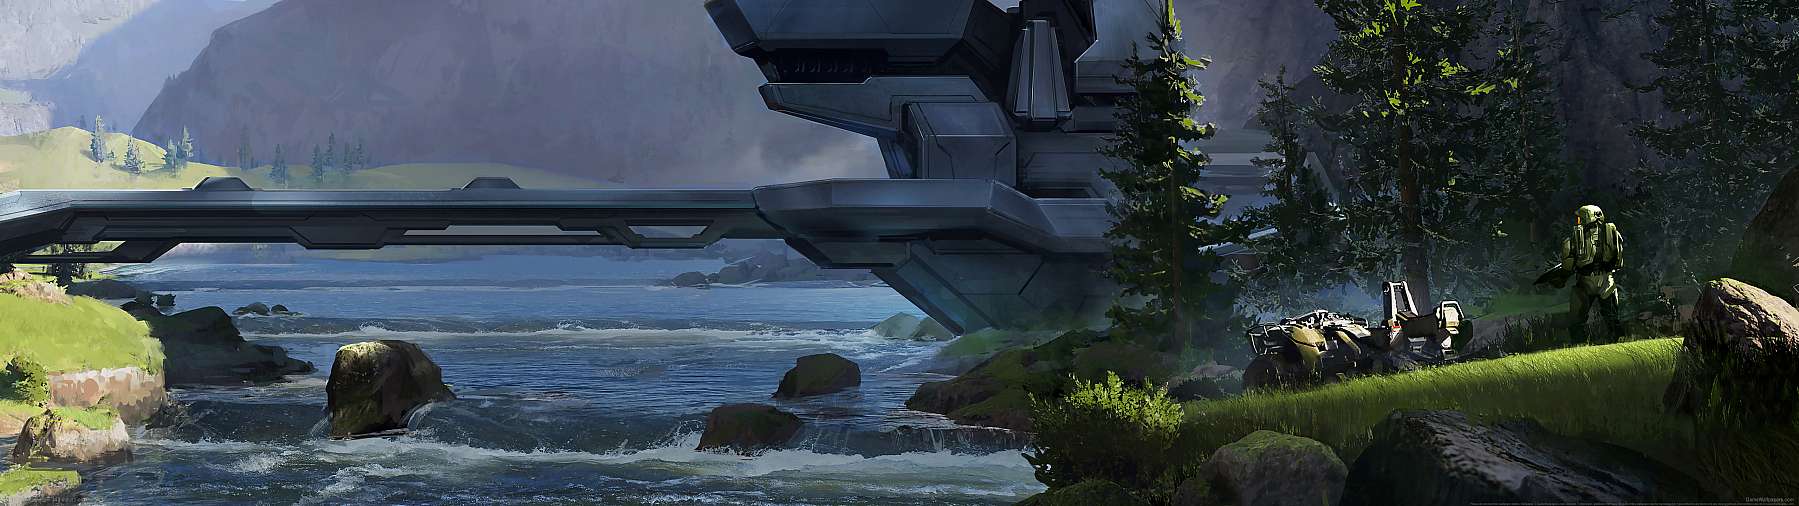 Halo: Infinite superwide achtergrond 16